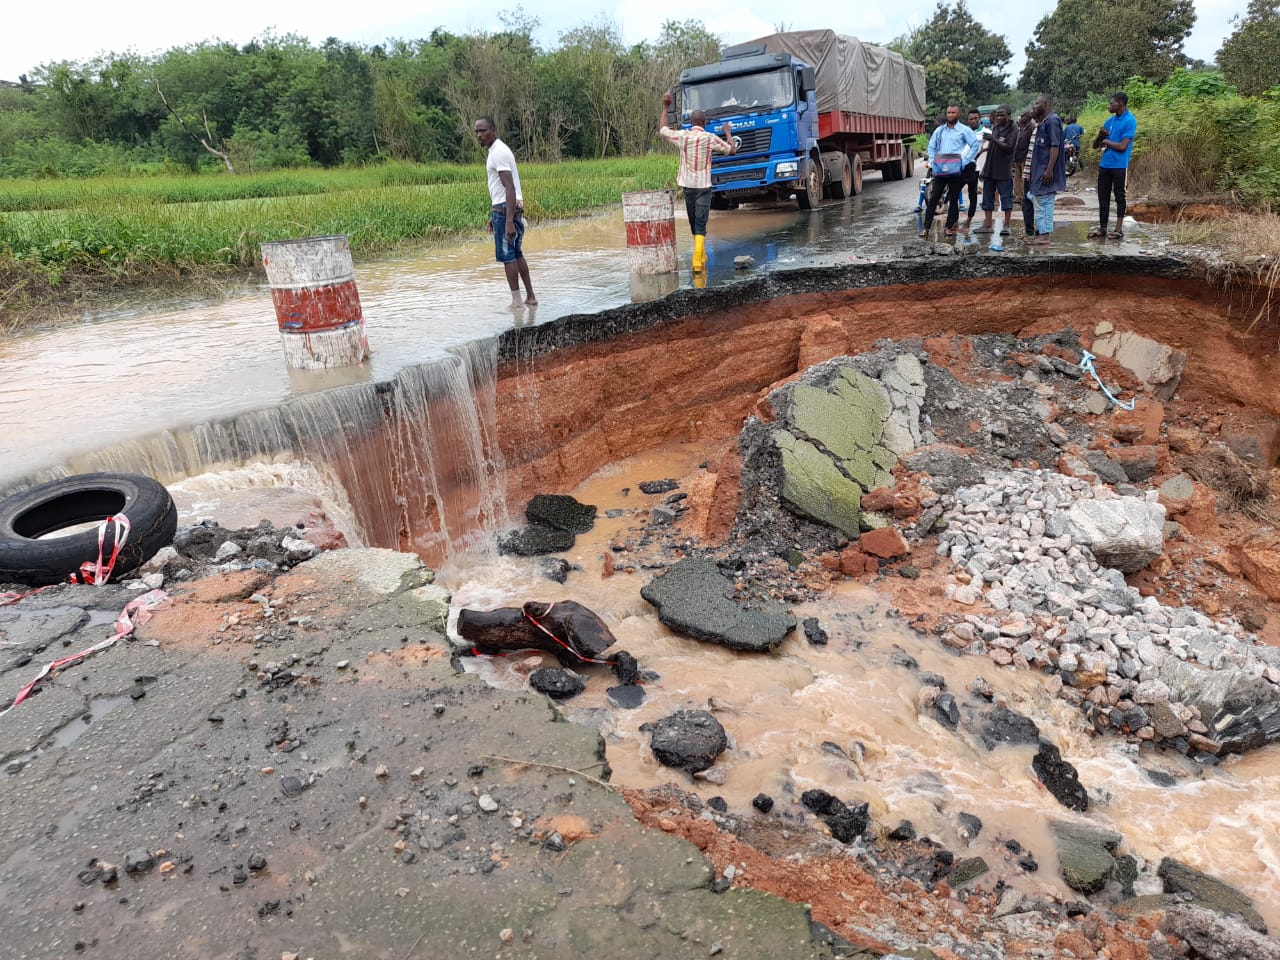 Benin-Akure highway collapses, motorists, passengers stranded